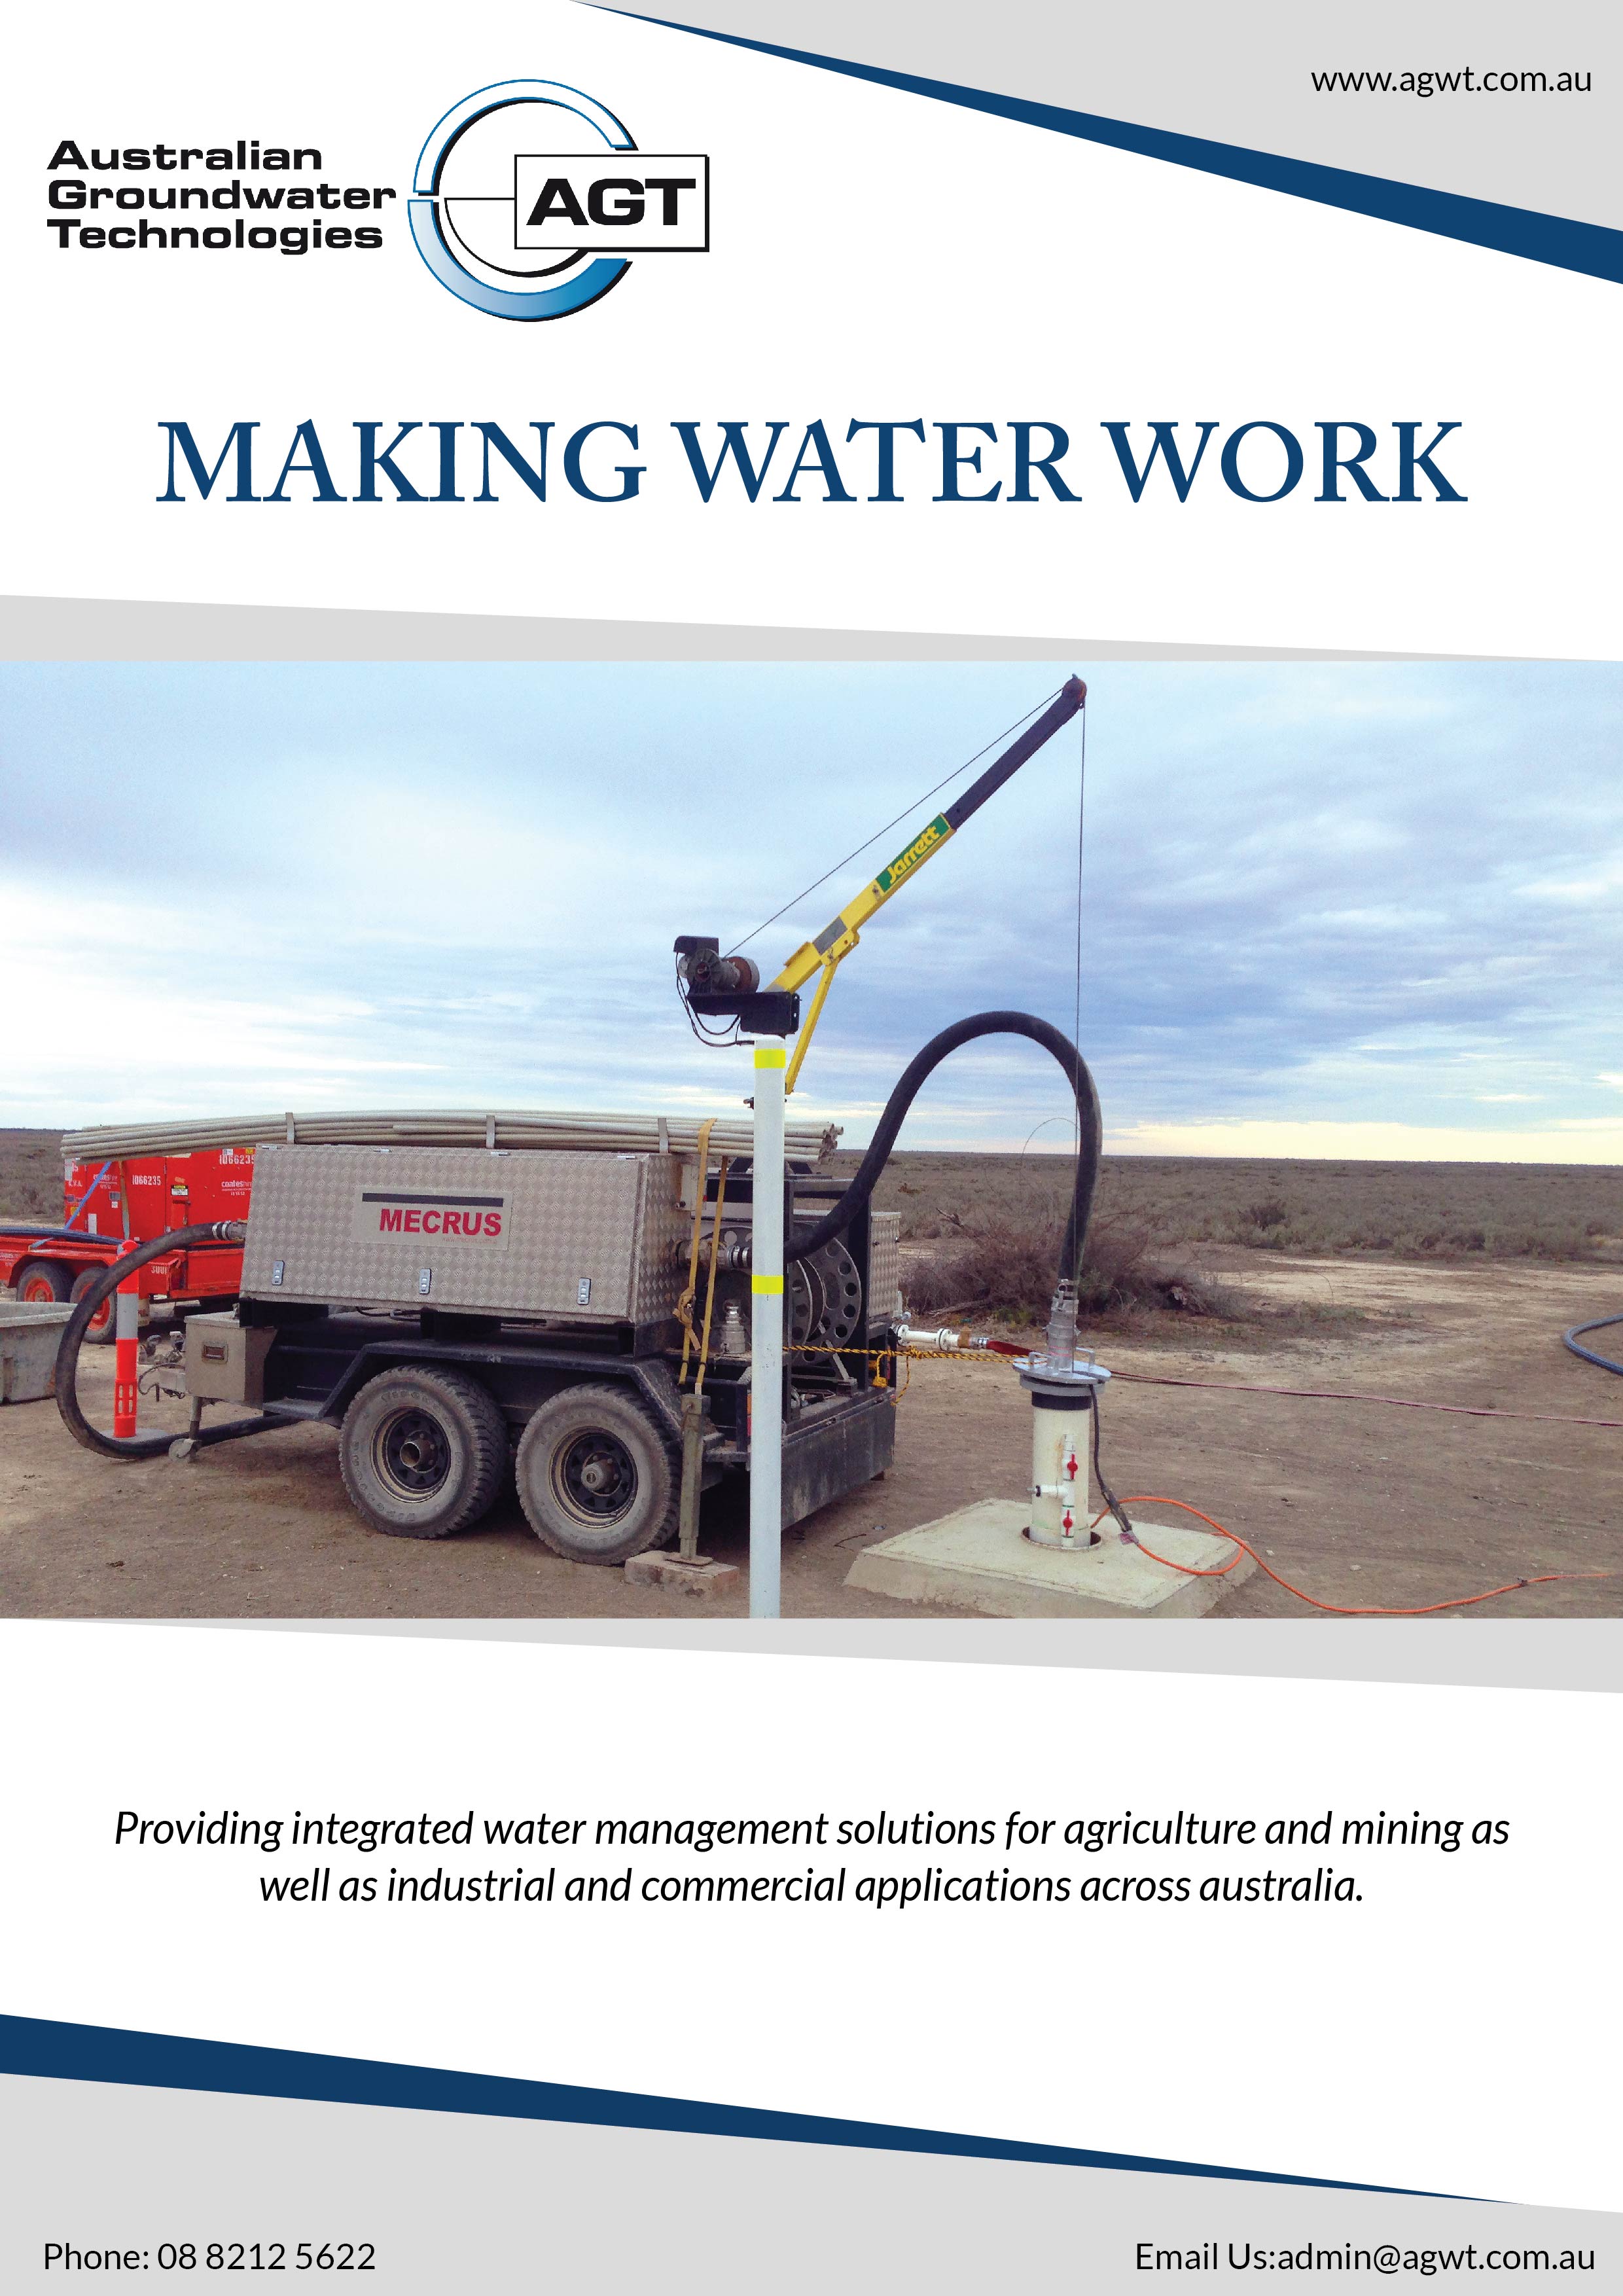 Australian Groundwater Technologies